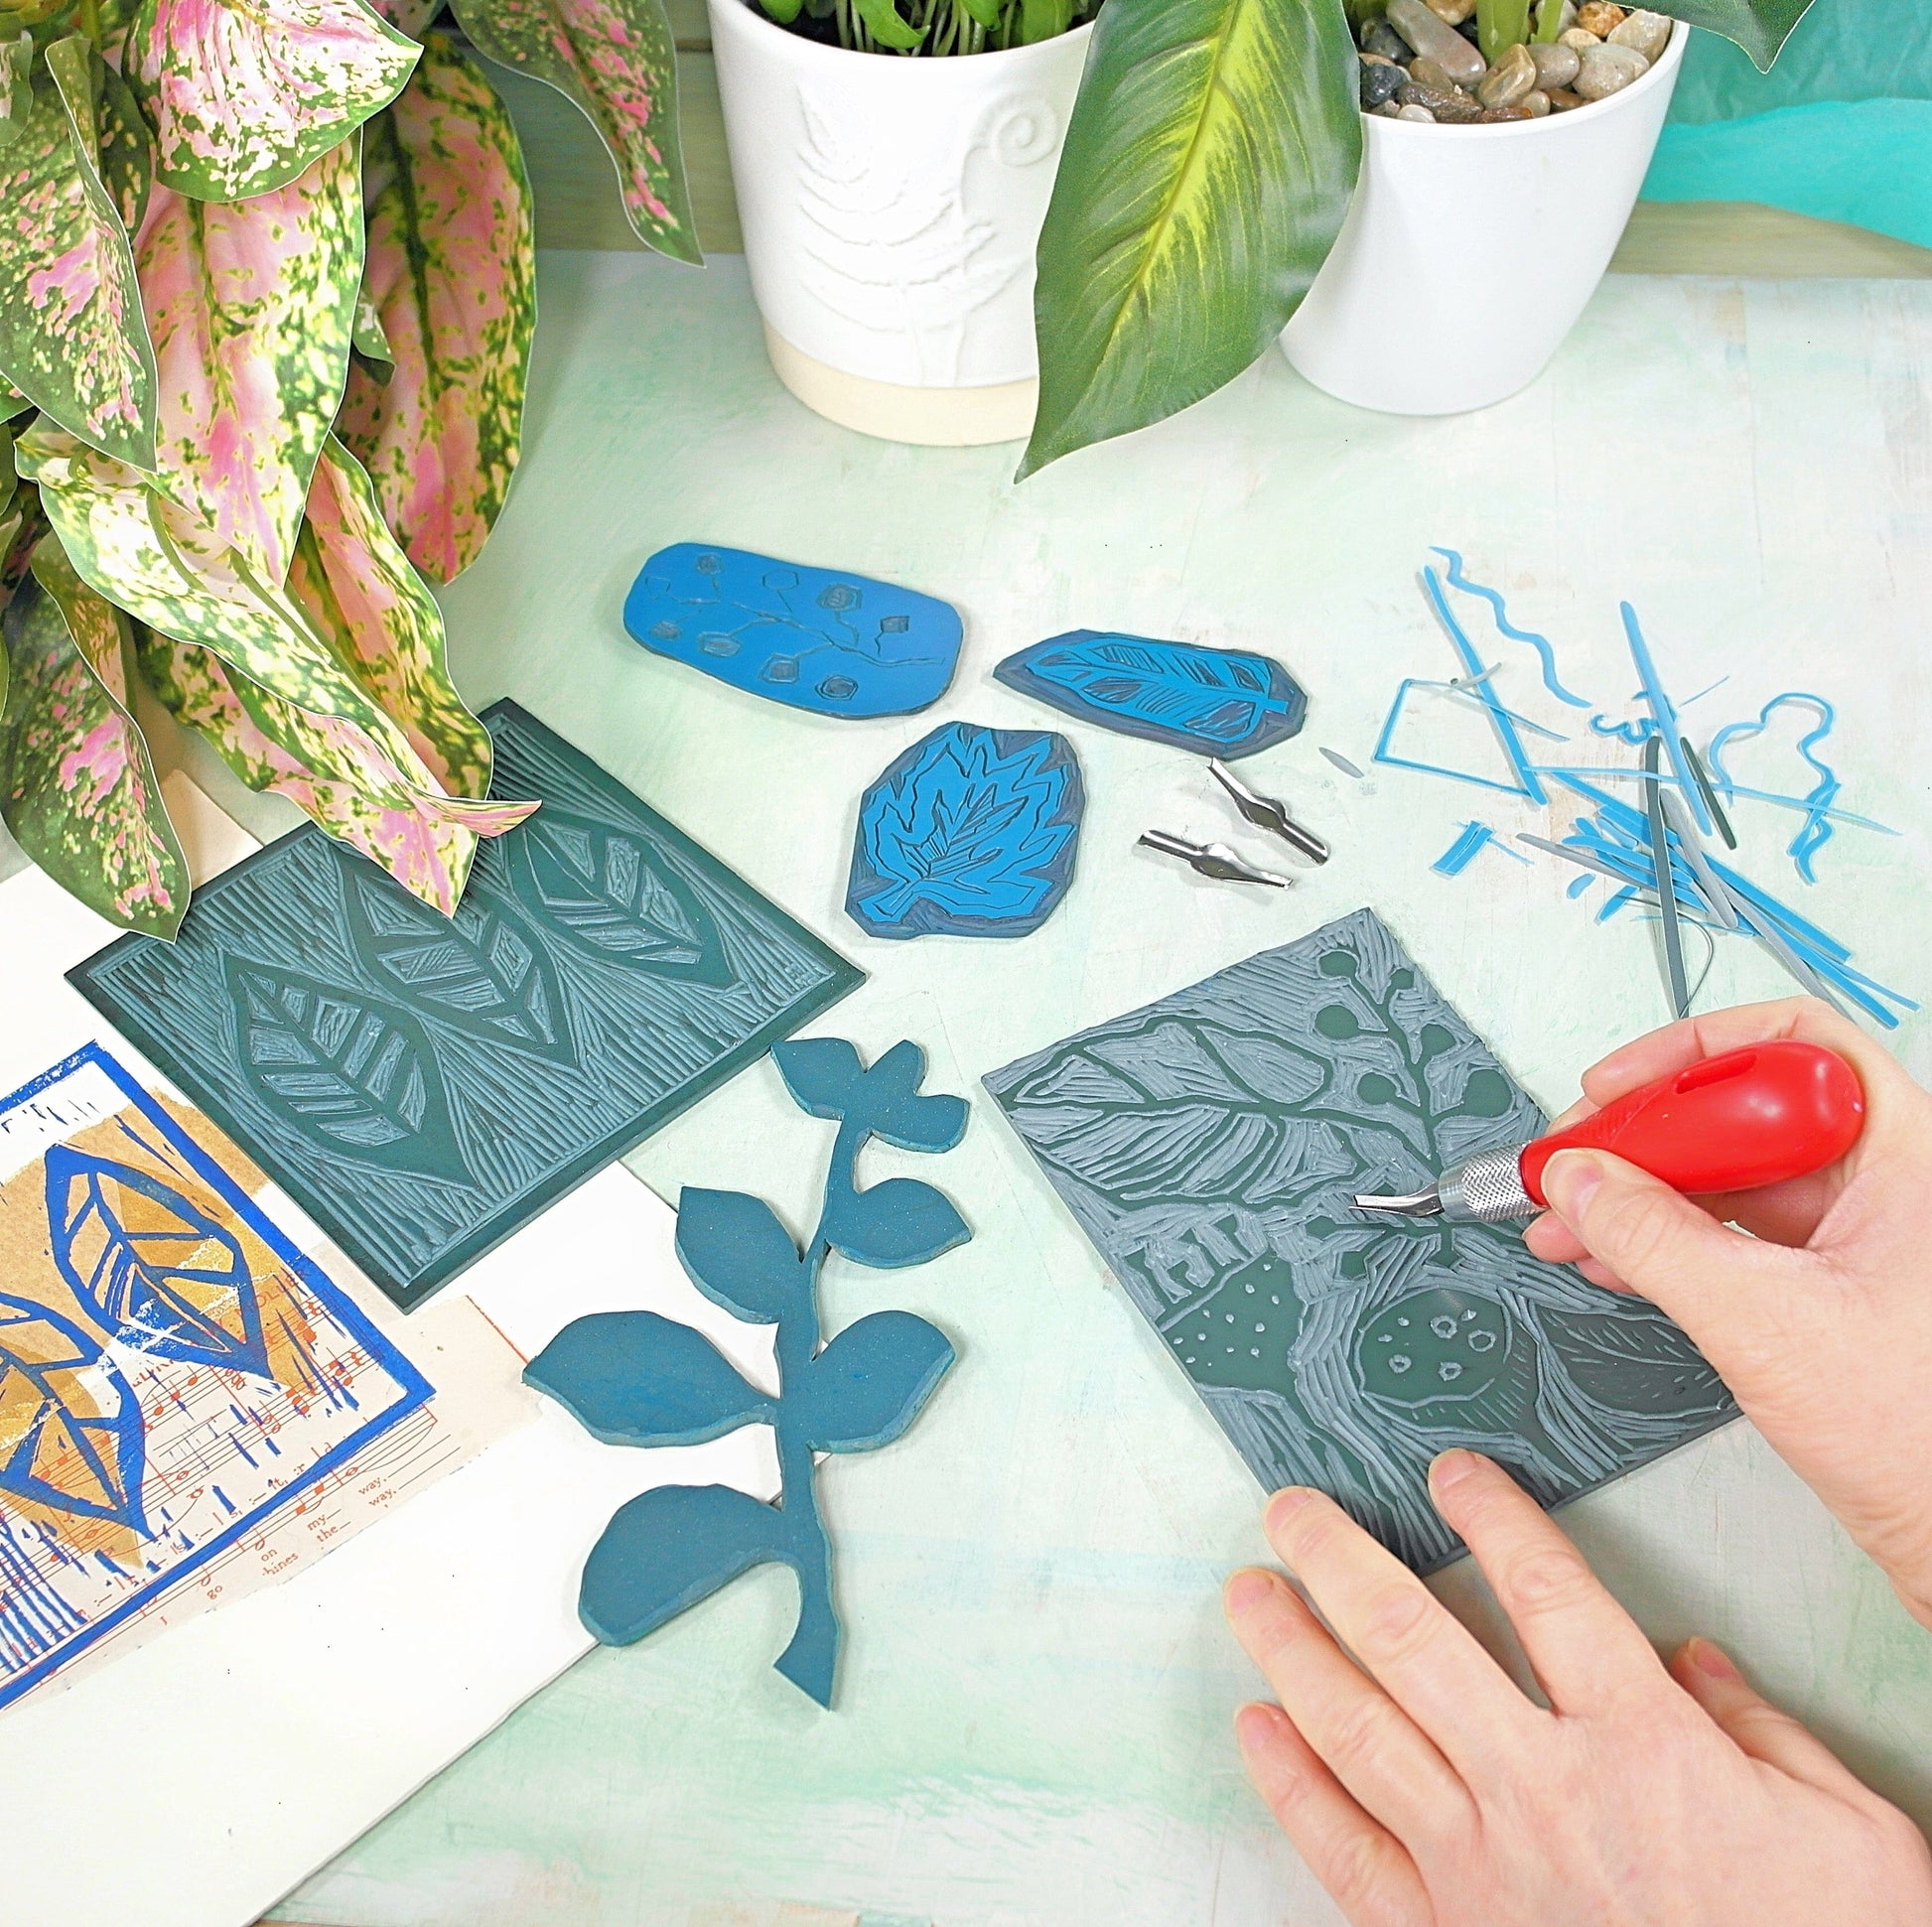 botanical theme cutting a lino design onto lino sheet material using a lino tool